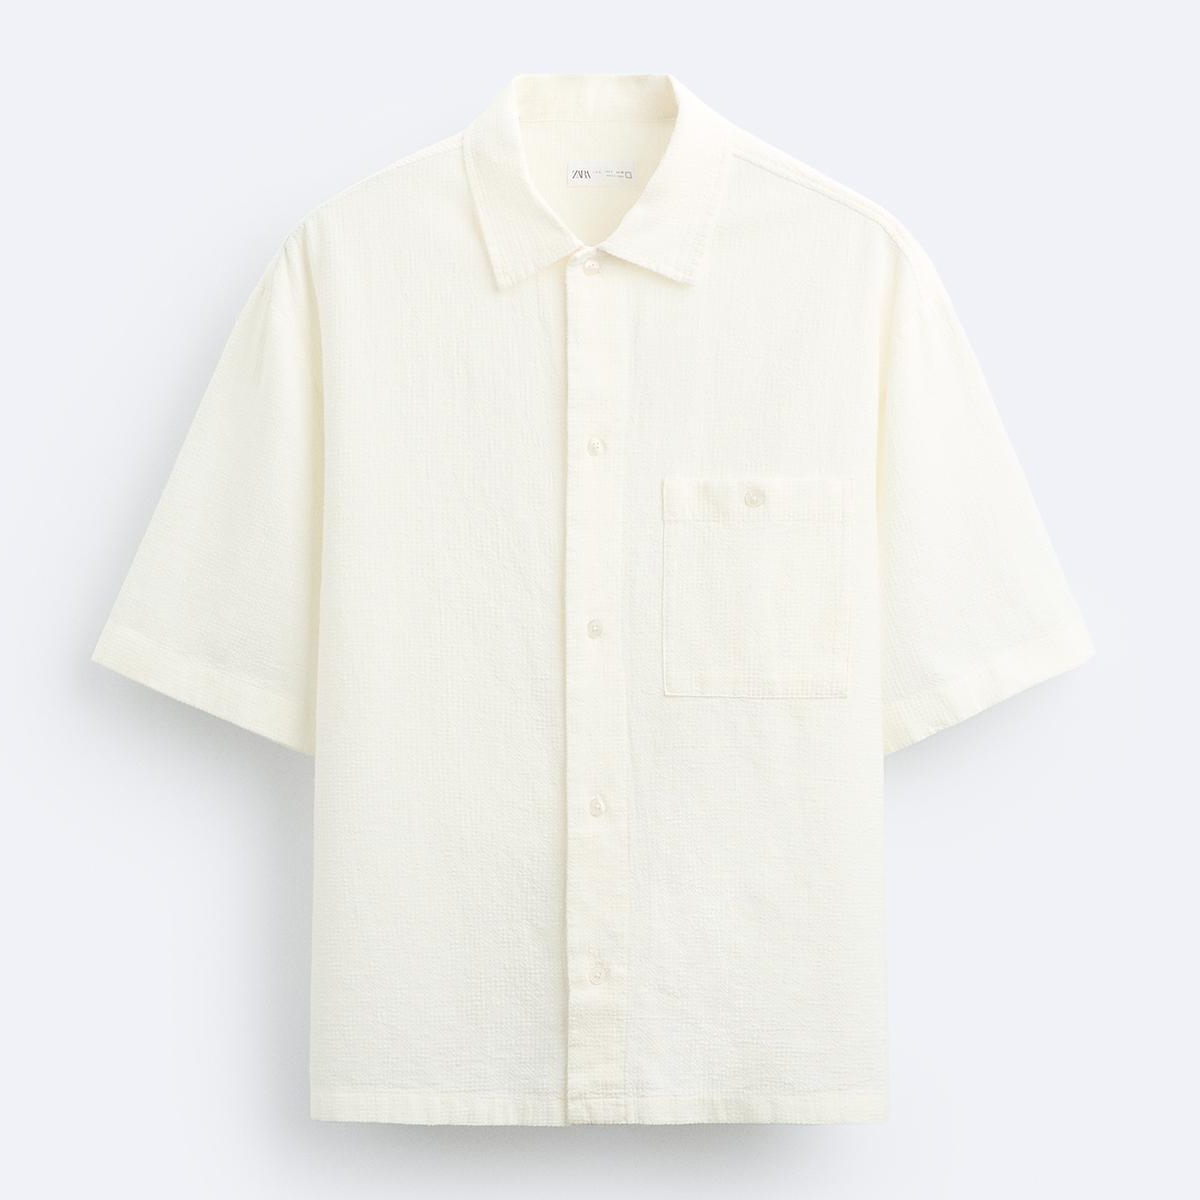 Рубашка Zara Cotton - Linen, белый рубашка zara striped linen cotton blend бирюзовый белый